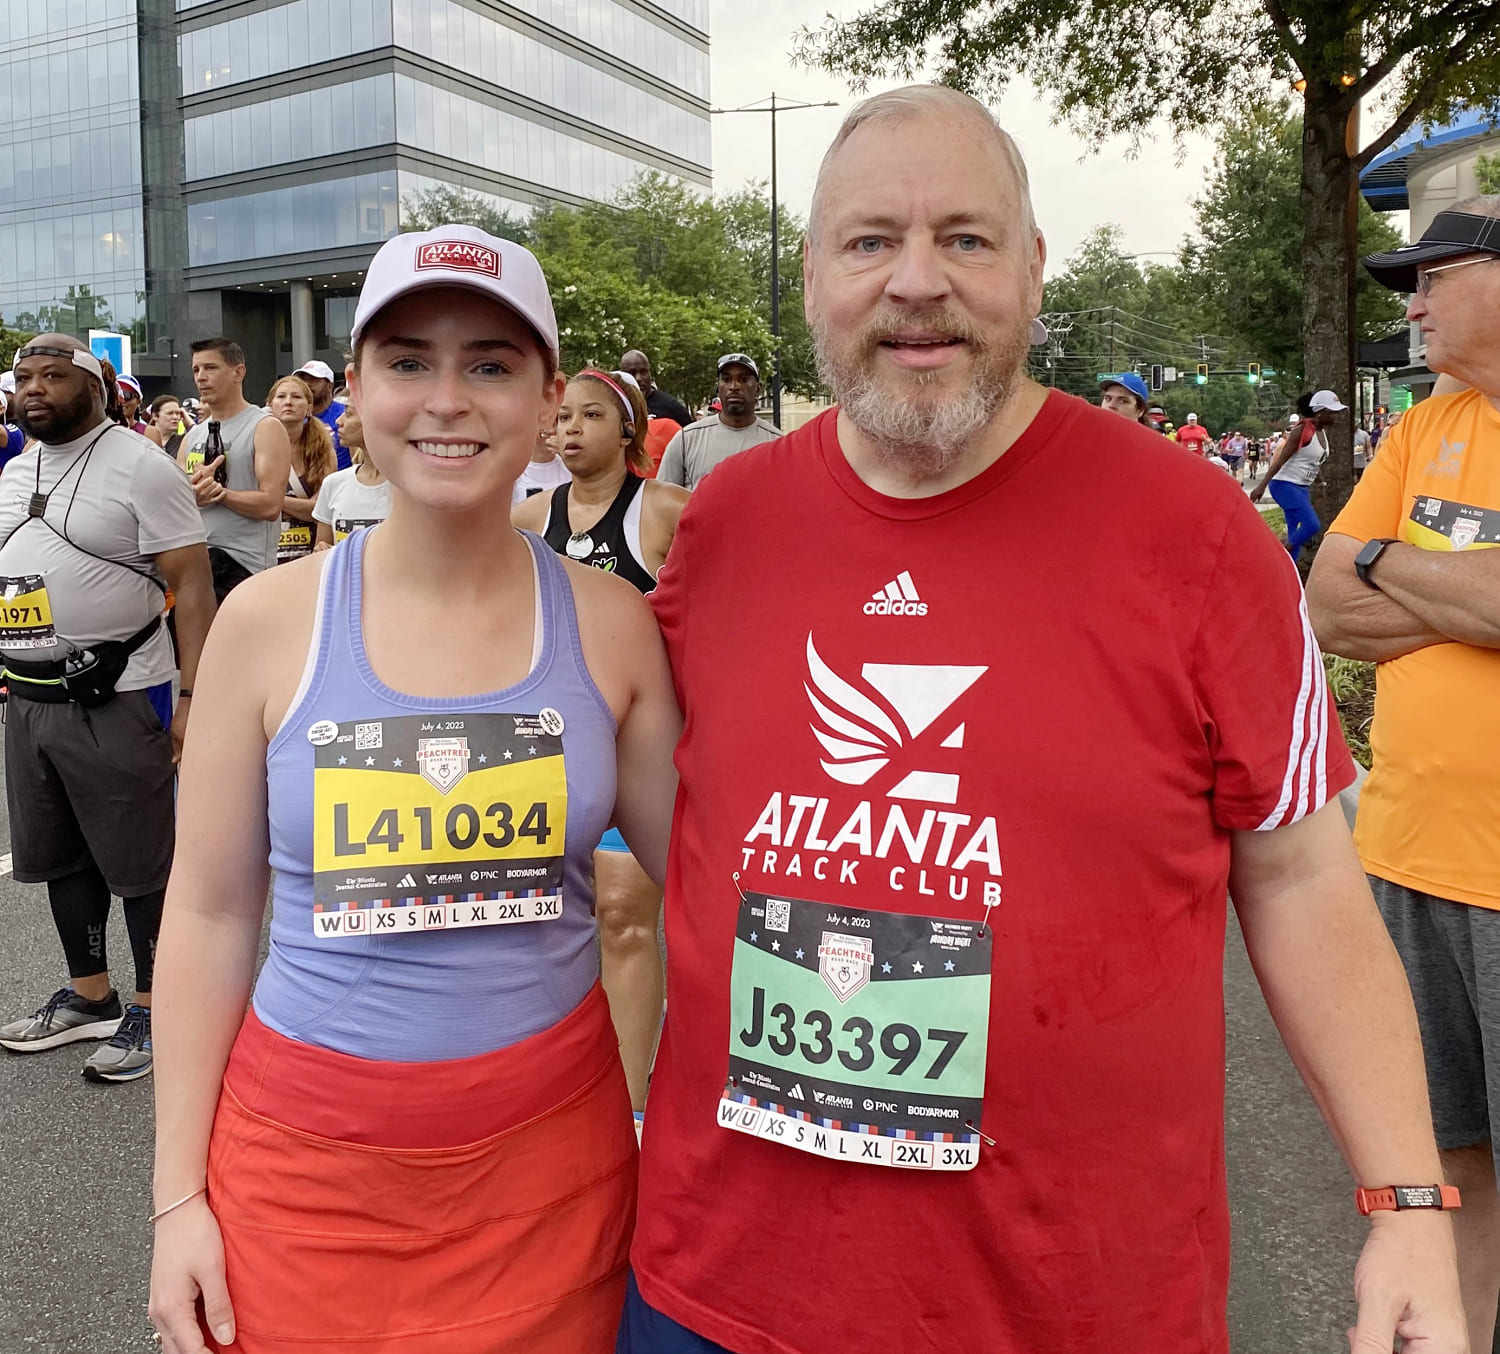 1 dad celebrates 200-pound weight loss by running 63 marathons